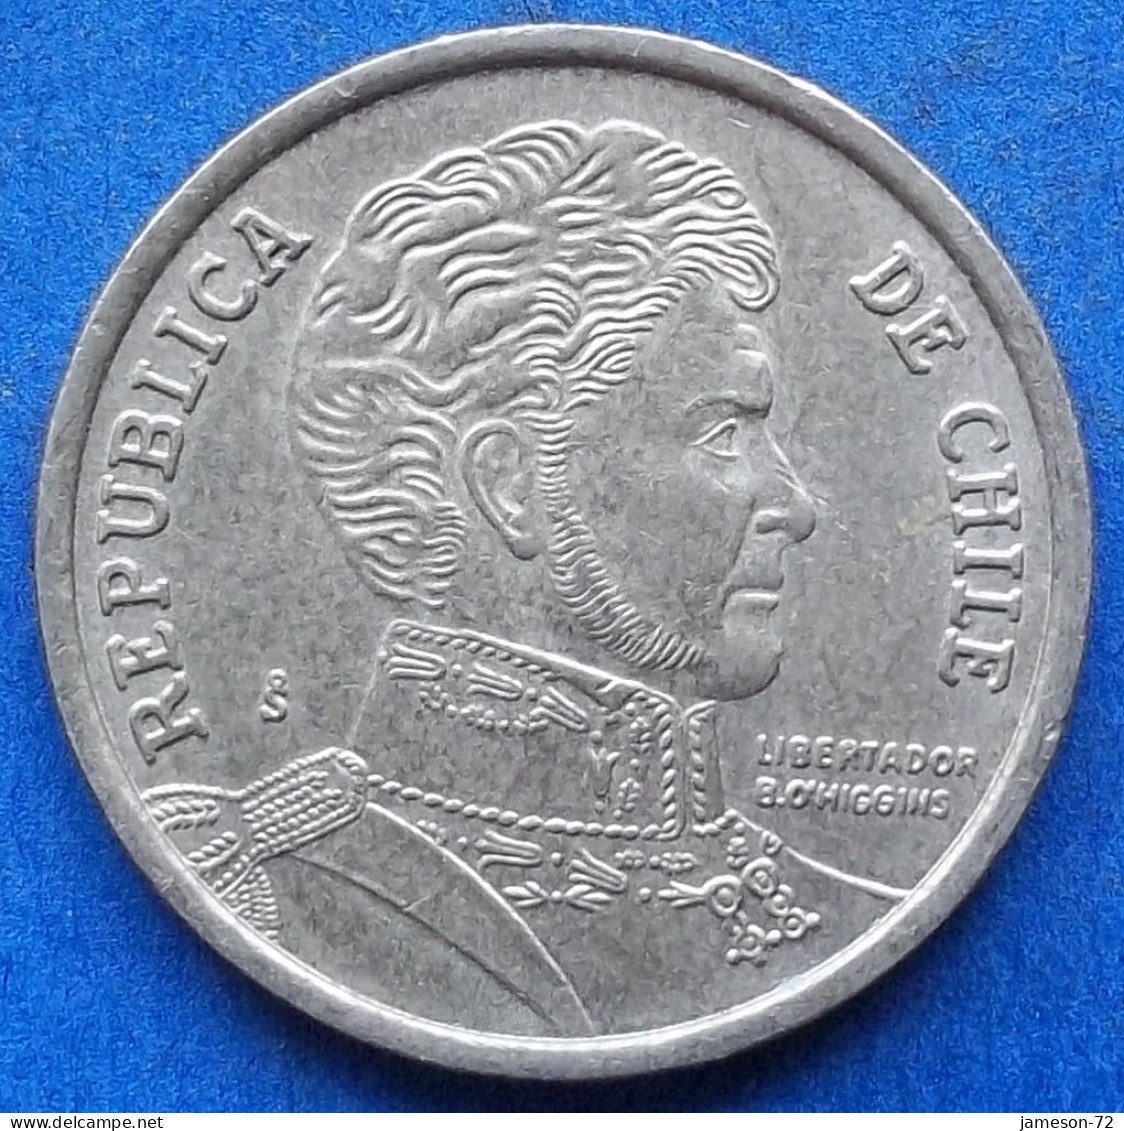 CHILE - 10 Pesos 2011 So KM# 228.2 Monetary Reform (1975) - Edelweiss Coins - Chili